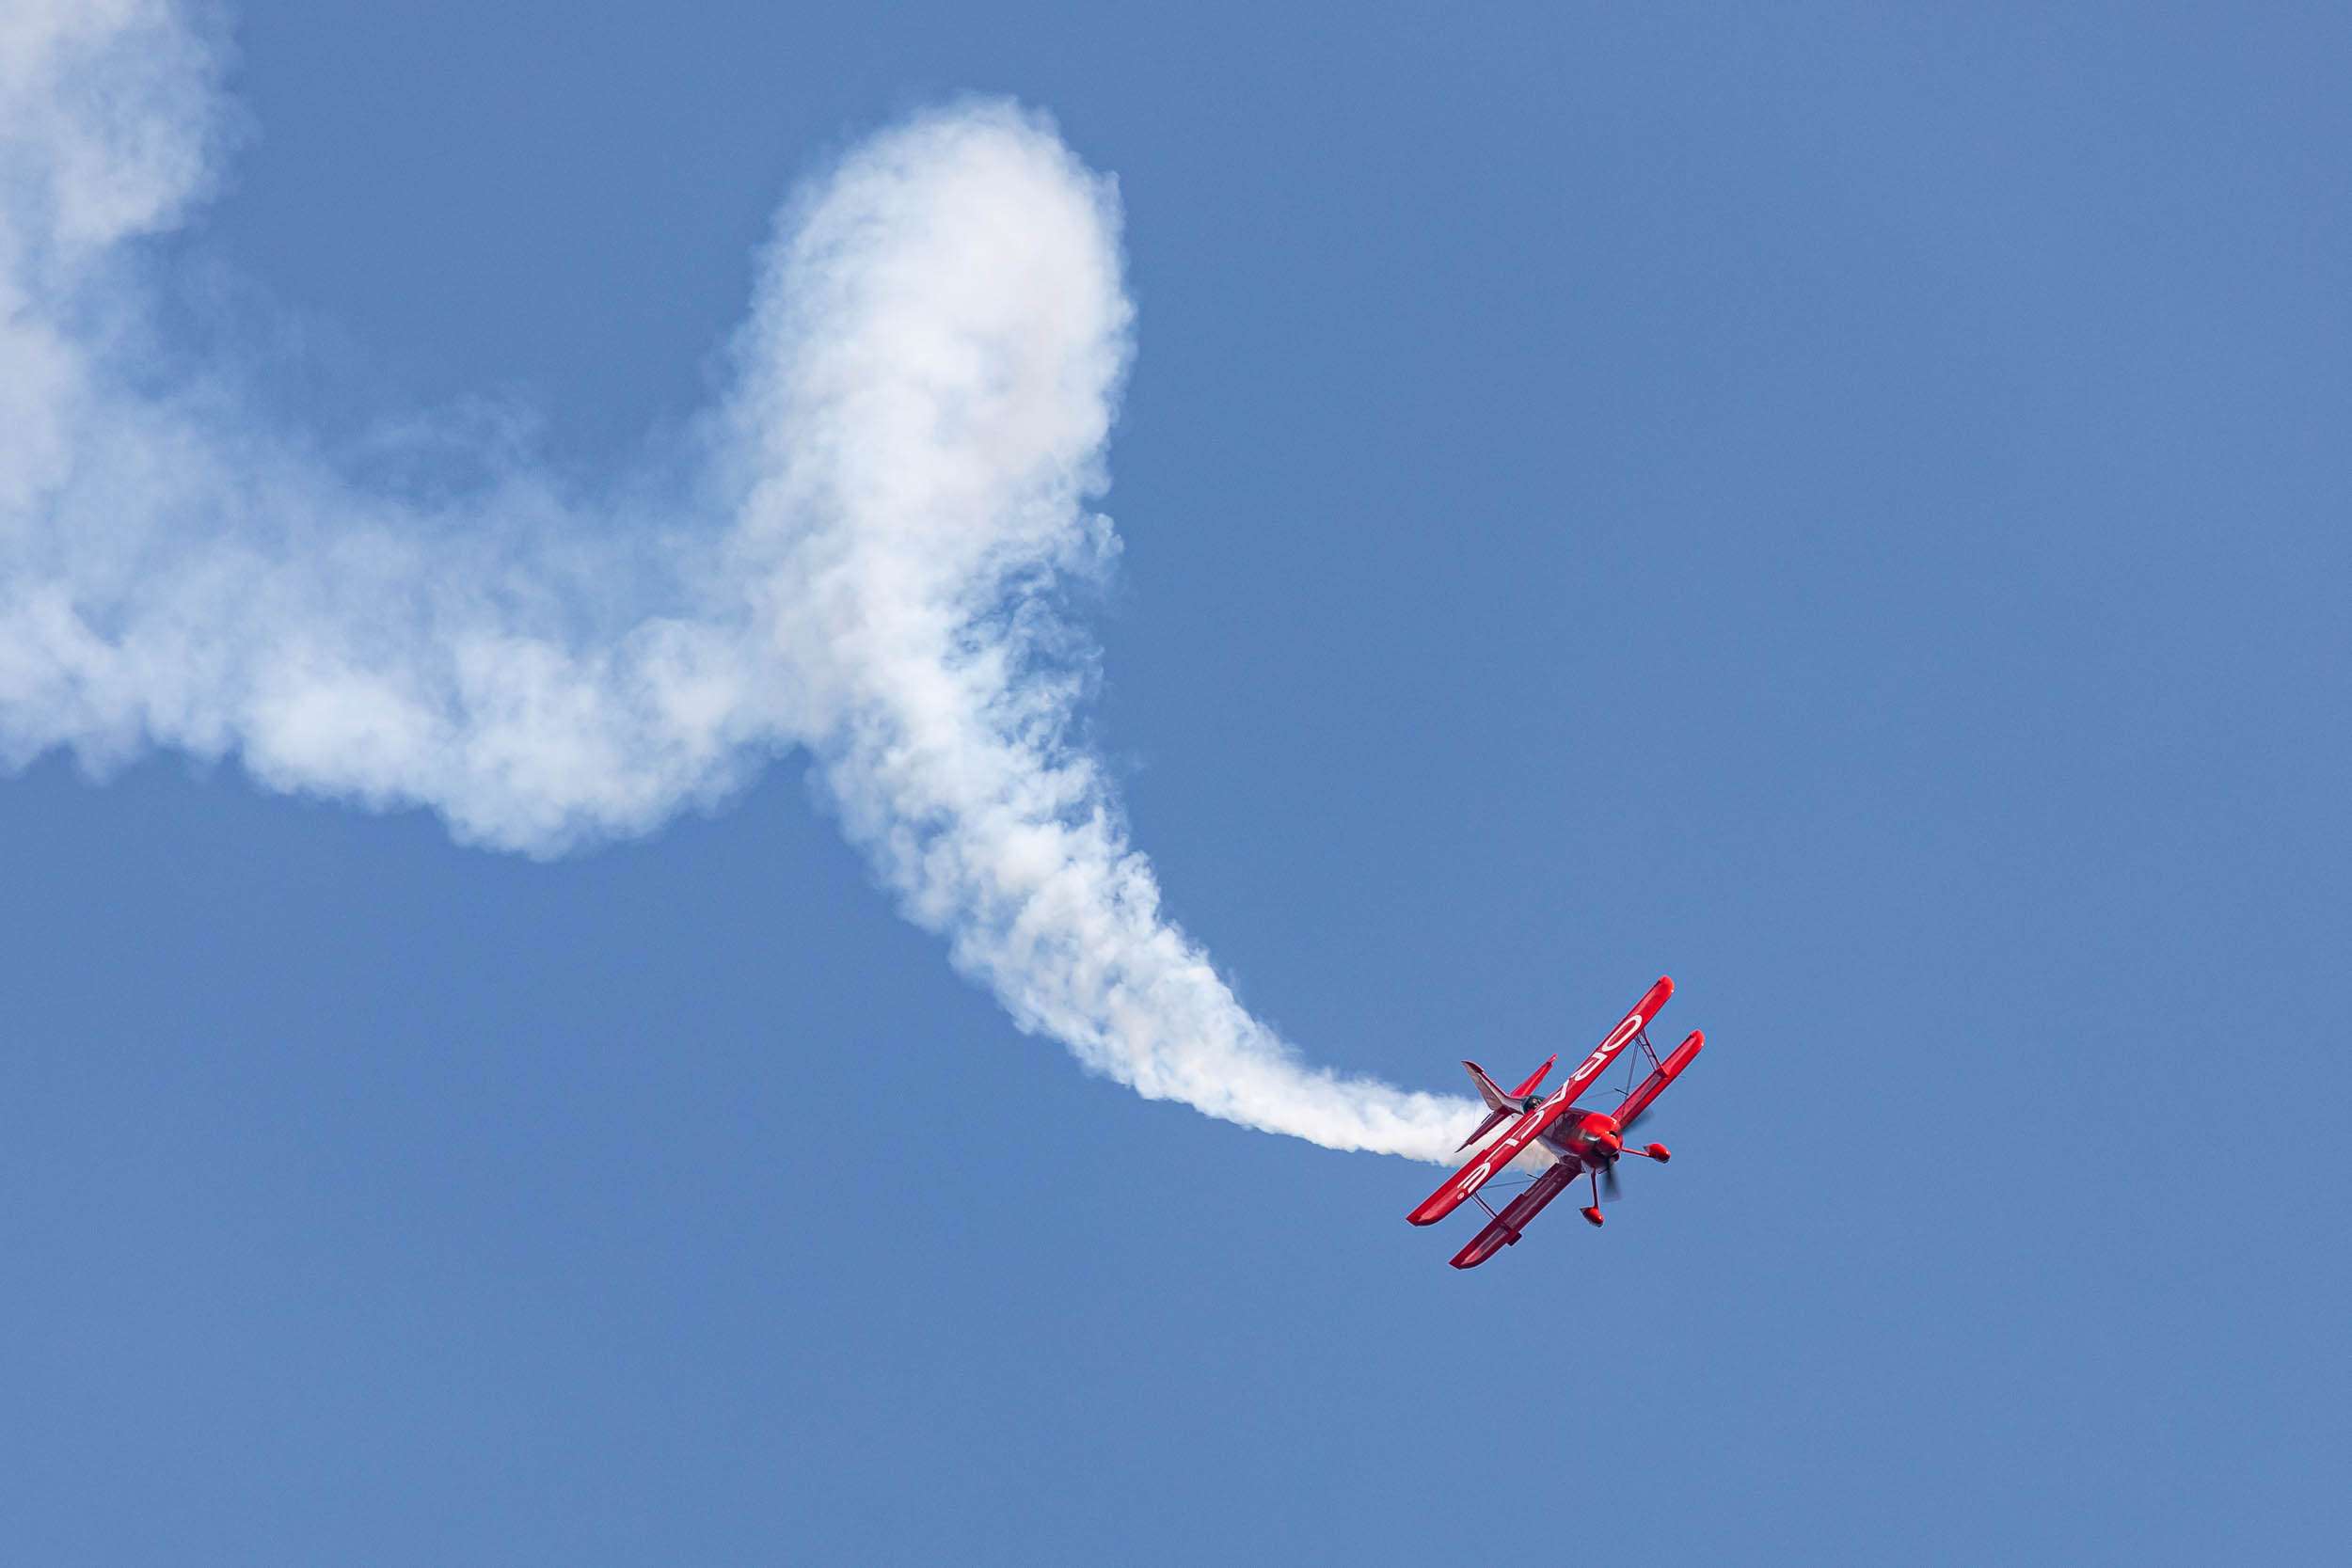 A red biplane flown by Sean D. Tucker performs quick barrel rolls